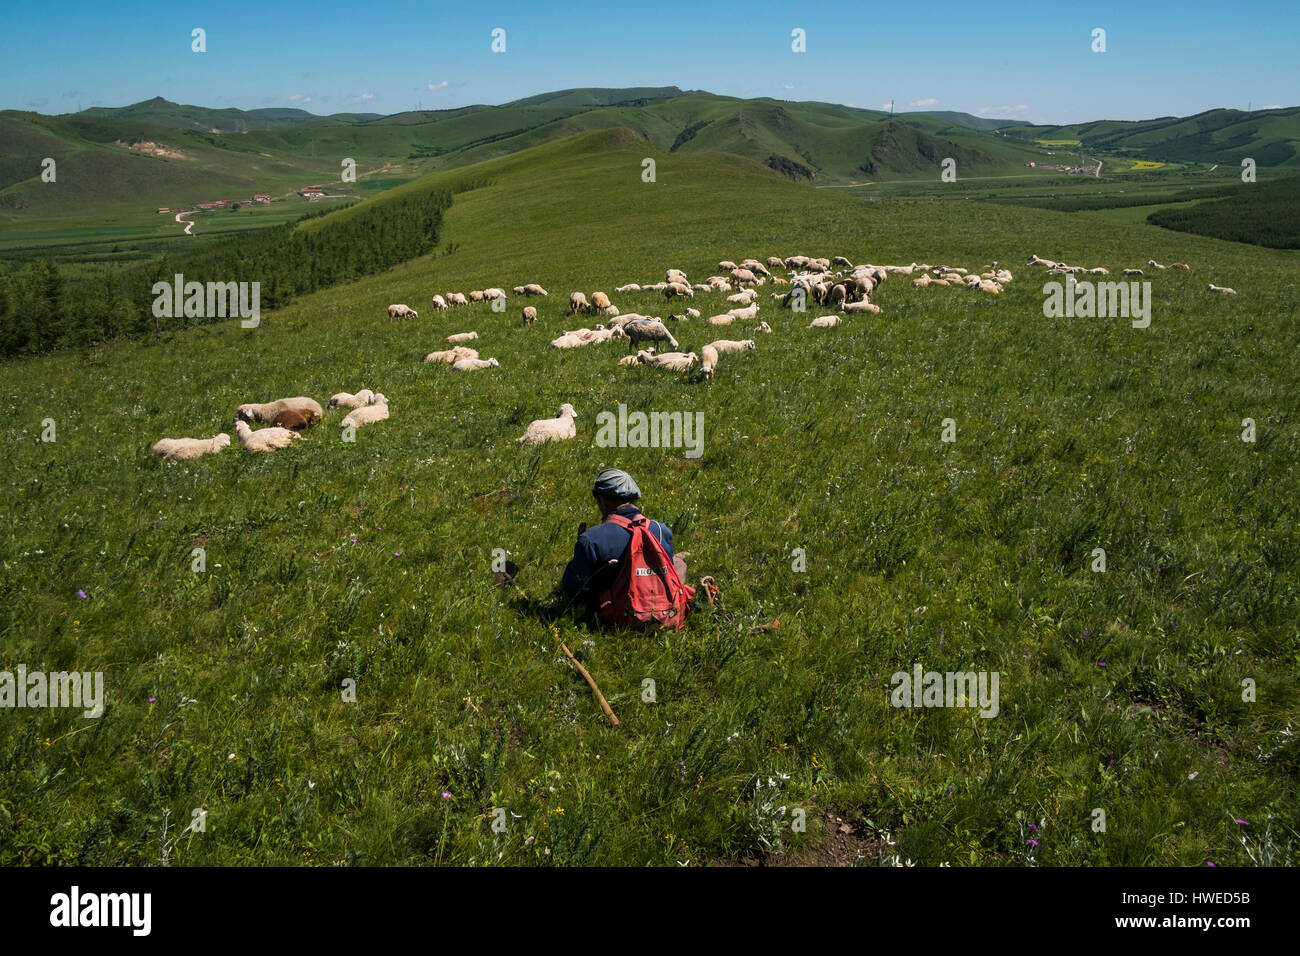 The shepherd of the grasslands bashang hebei china Stock Photo